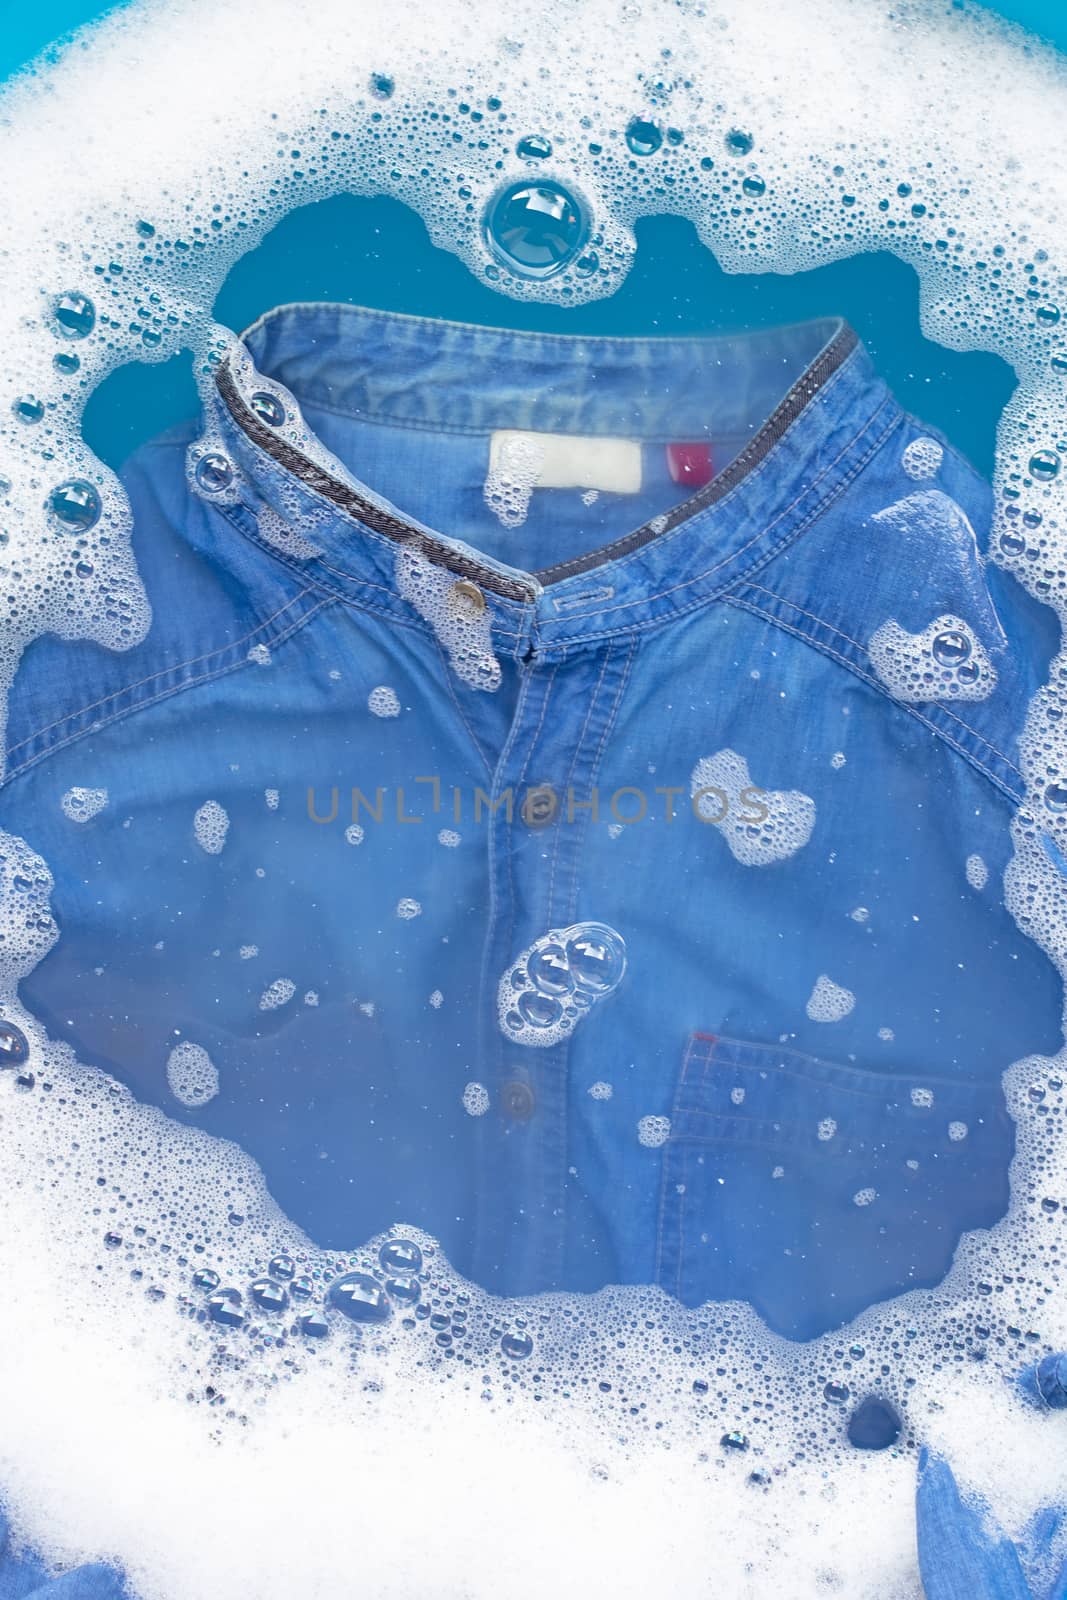 Shirt soak in powder detergent water dissolution. Laundry concep by Bowonpat